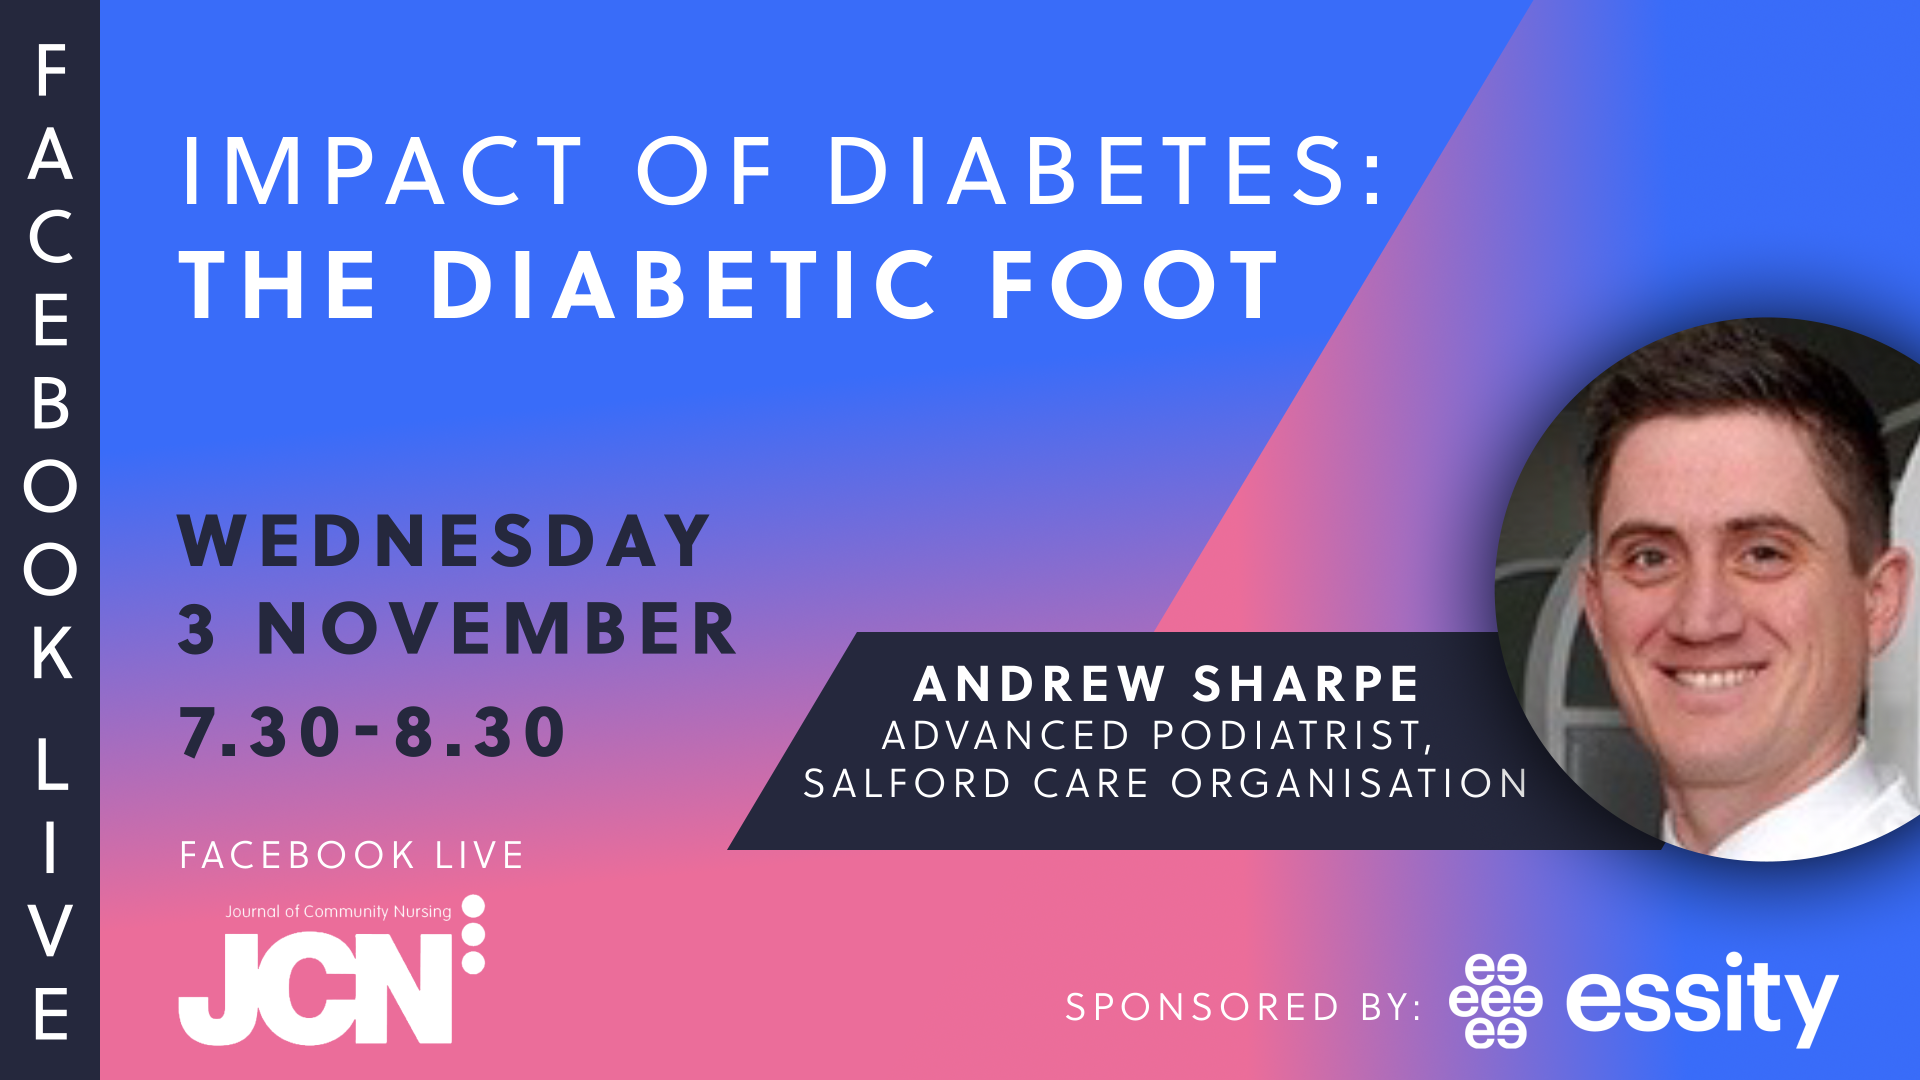 Facebook Live: Impact of diabetes: the diabetic foot